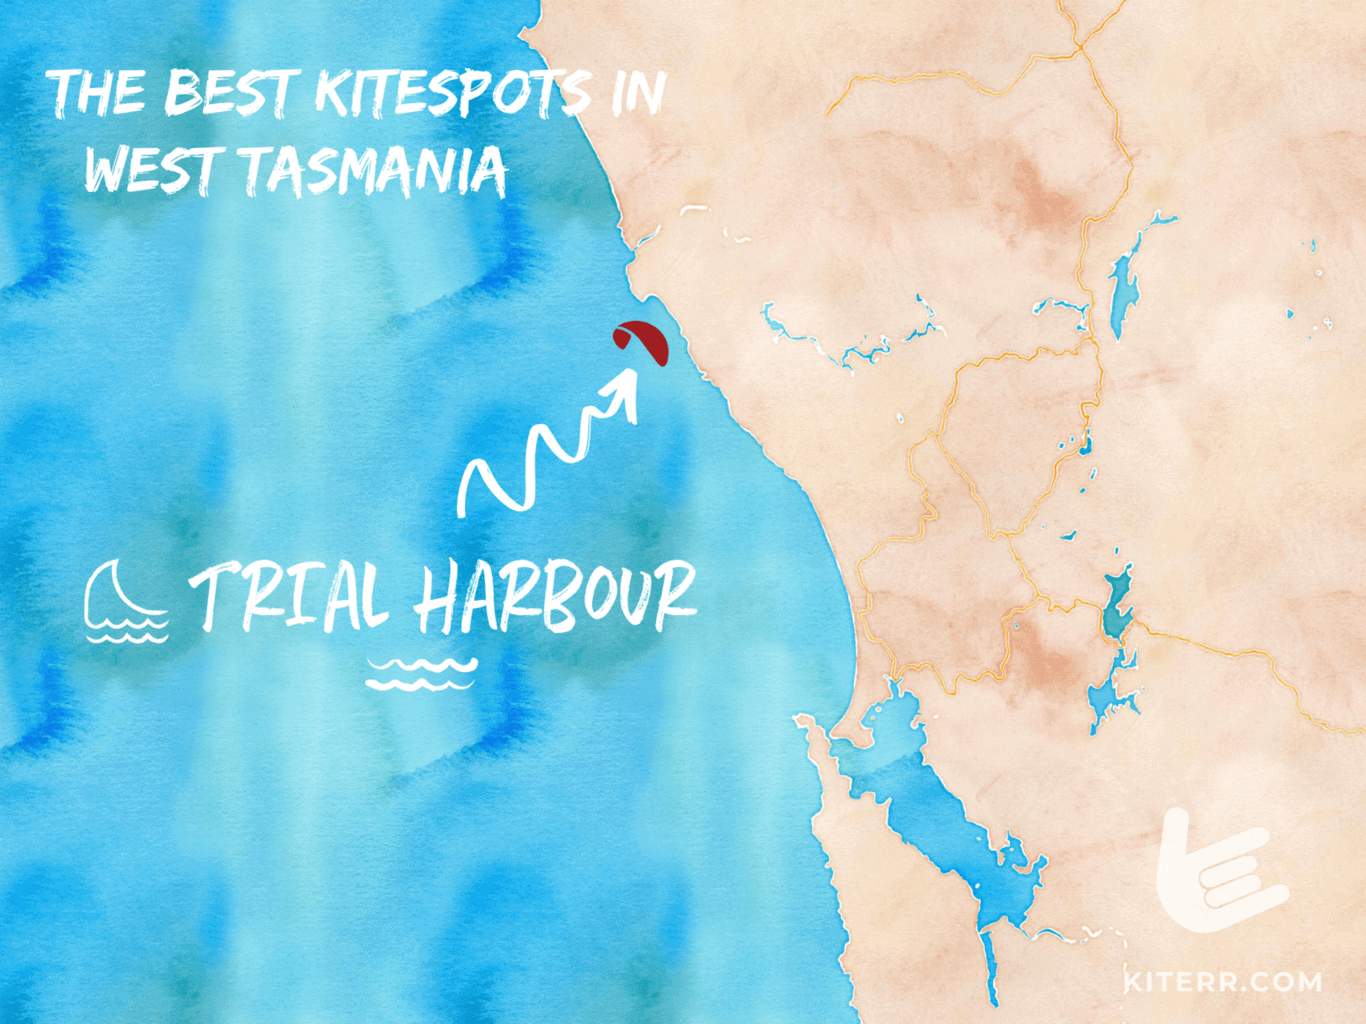 The best kitespots in West Tasmania // Kiterr.com